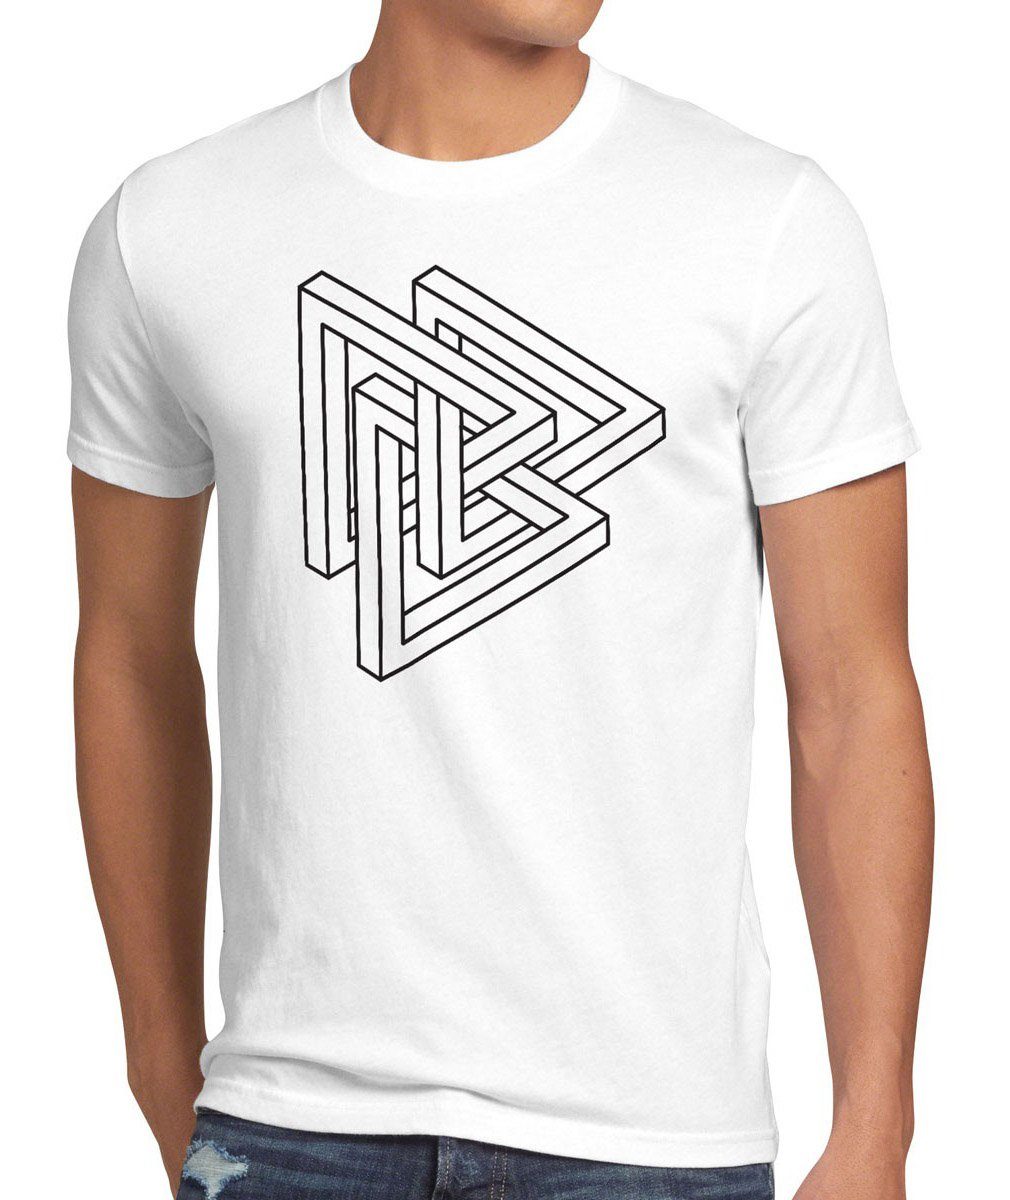 style3 Print-Shirt Herren T-Shirt Cooper Würfel Sheldon geo Escher Theory weiß Penrose Dreieck Big Bang